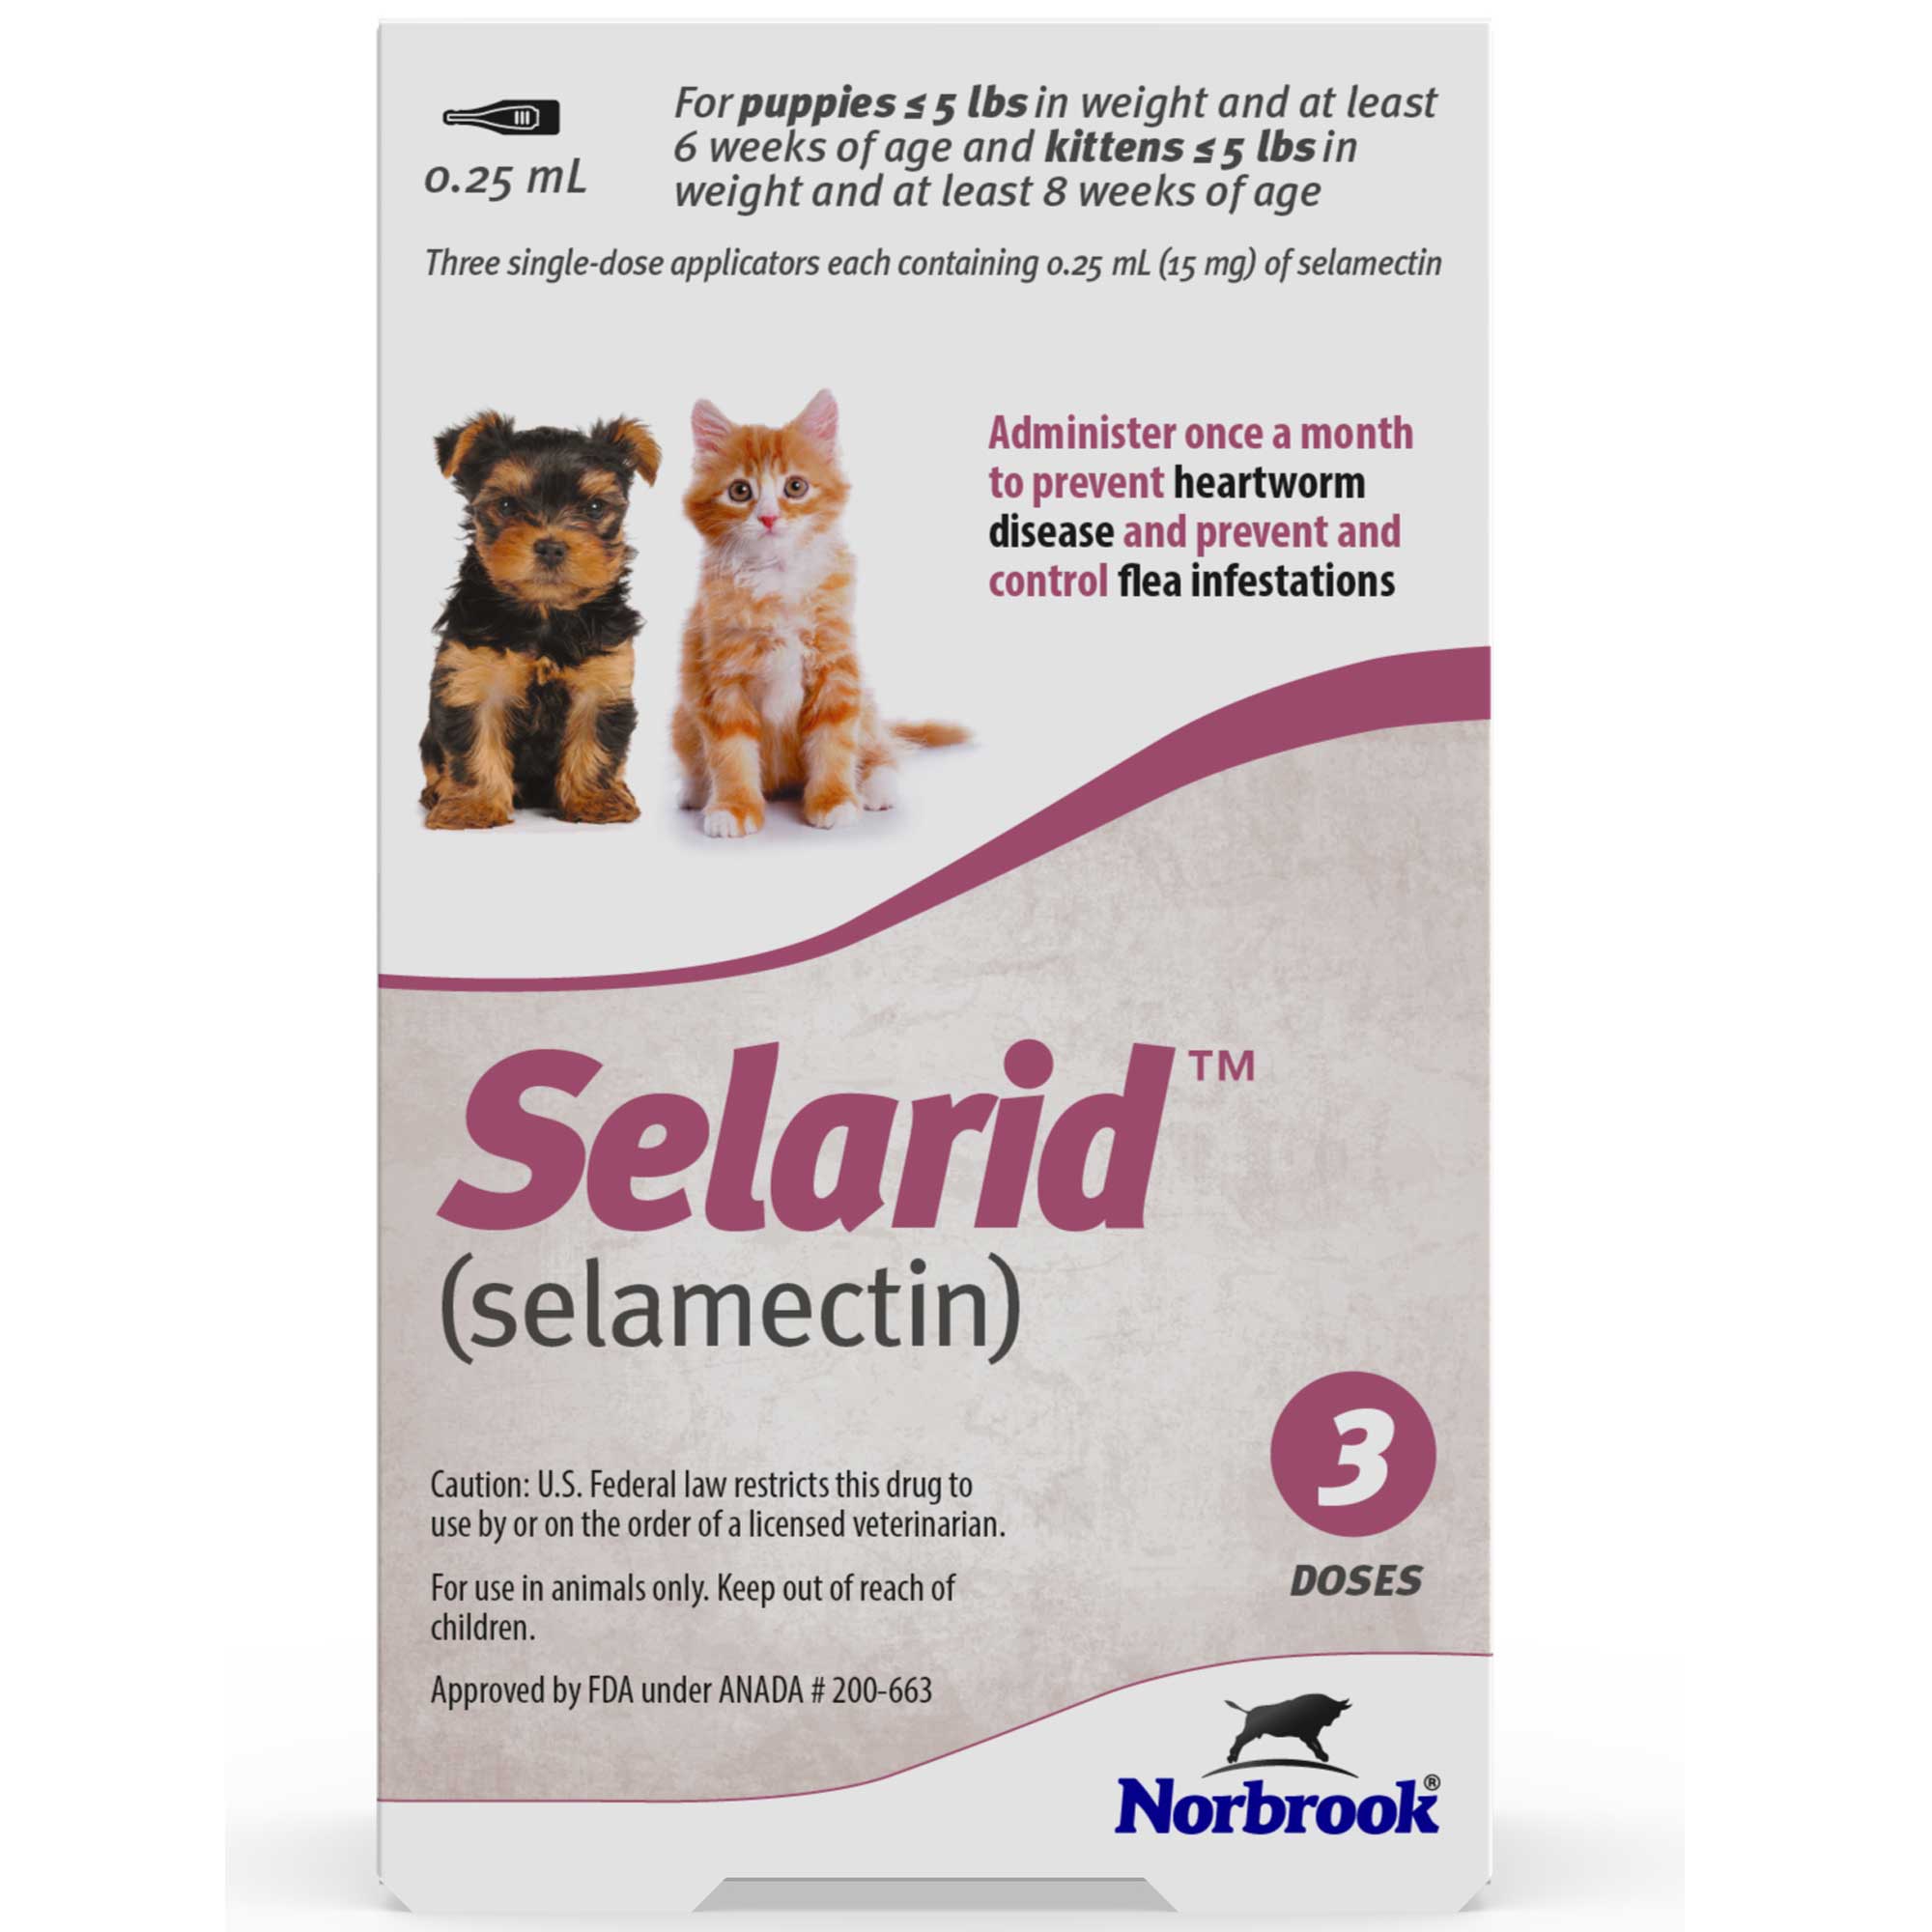 Selarid® (selamectin) Usage